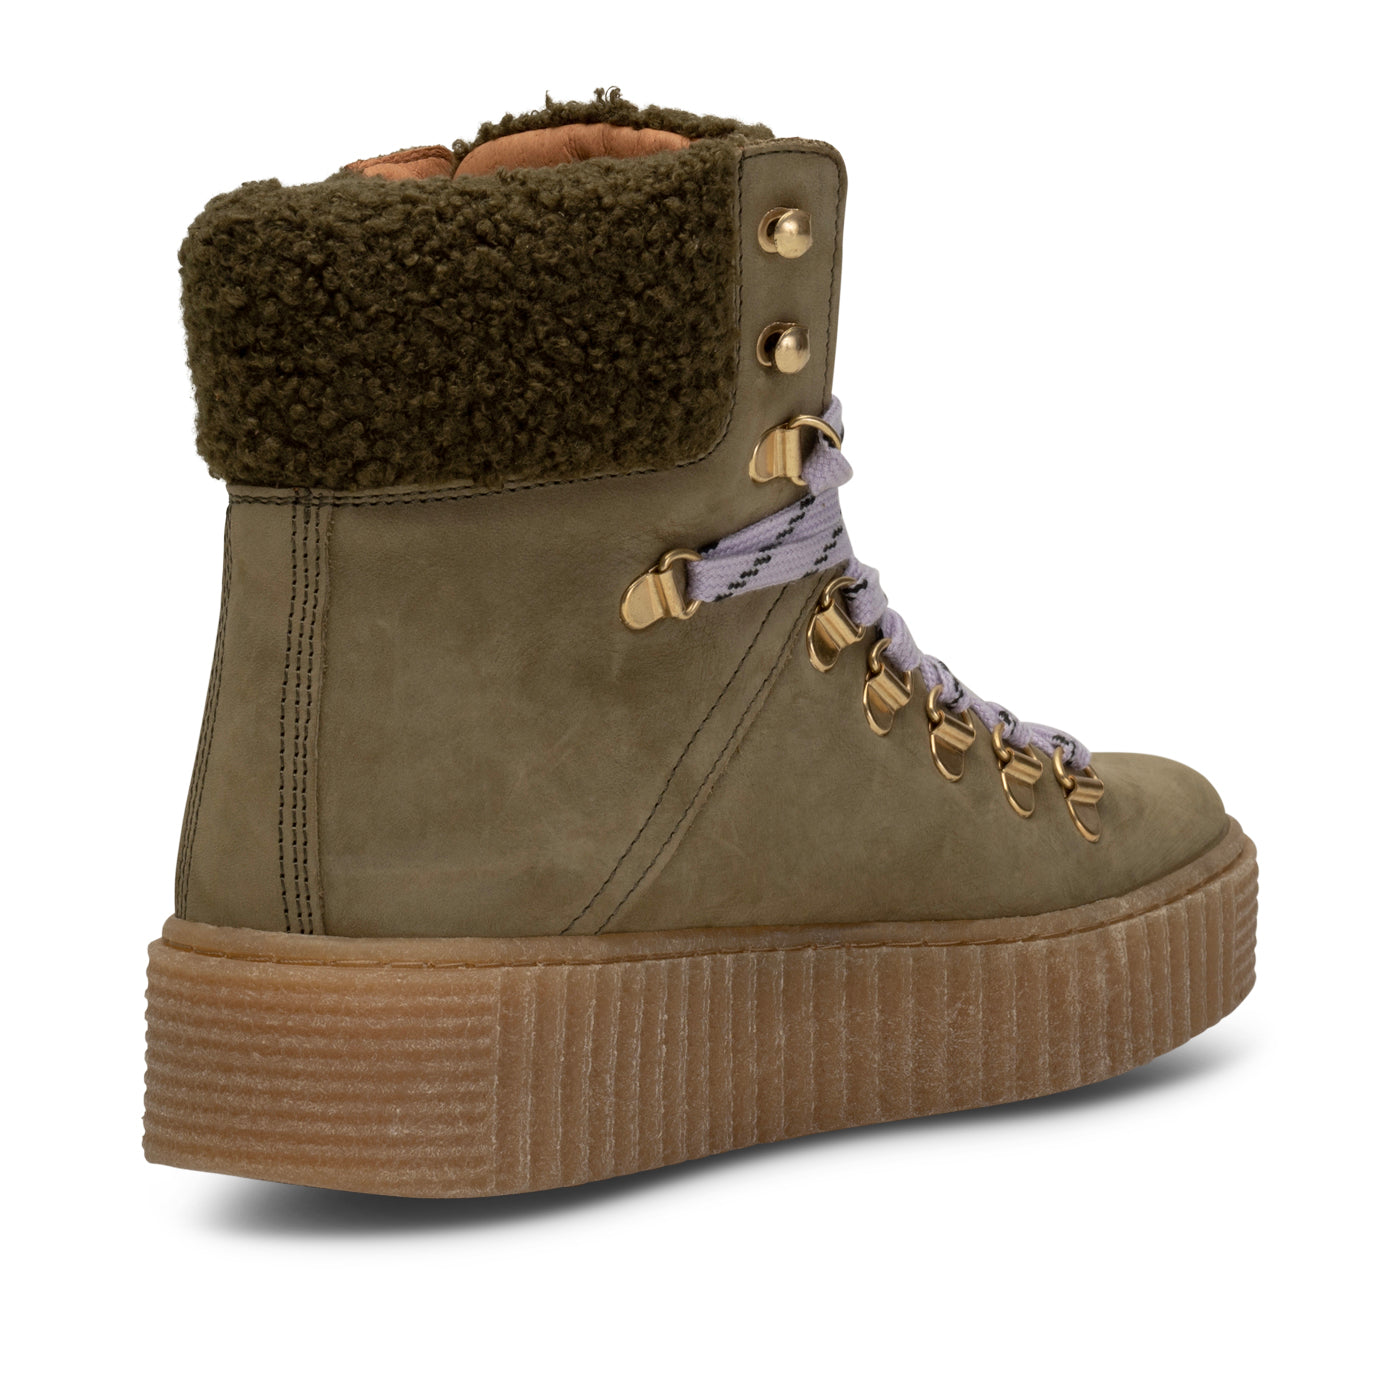 SHOE THE BEAR WOMENS Agda Boot Nubuck Leather Boots 151 KHAKI